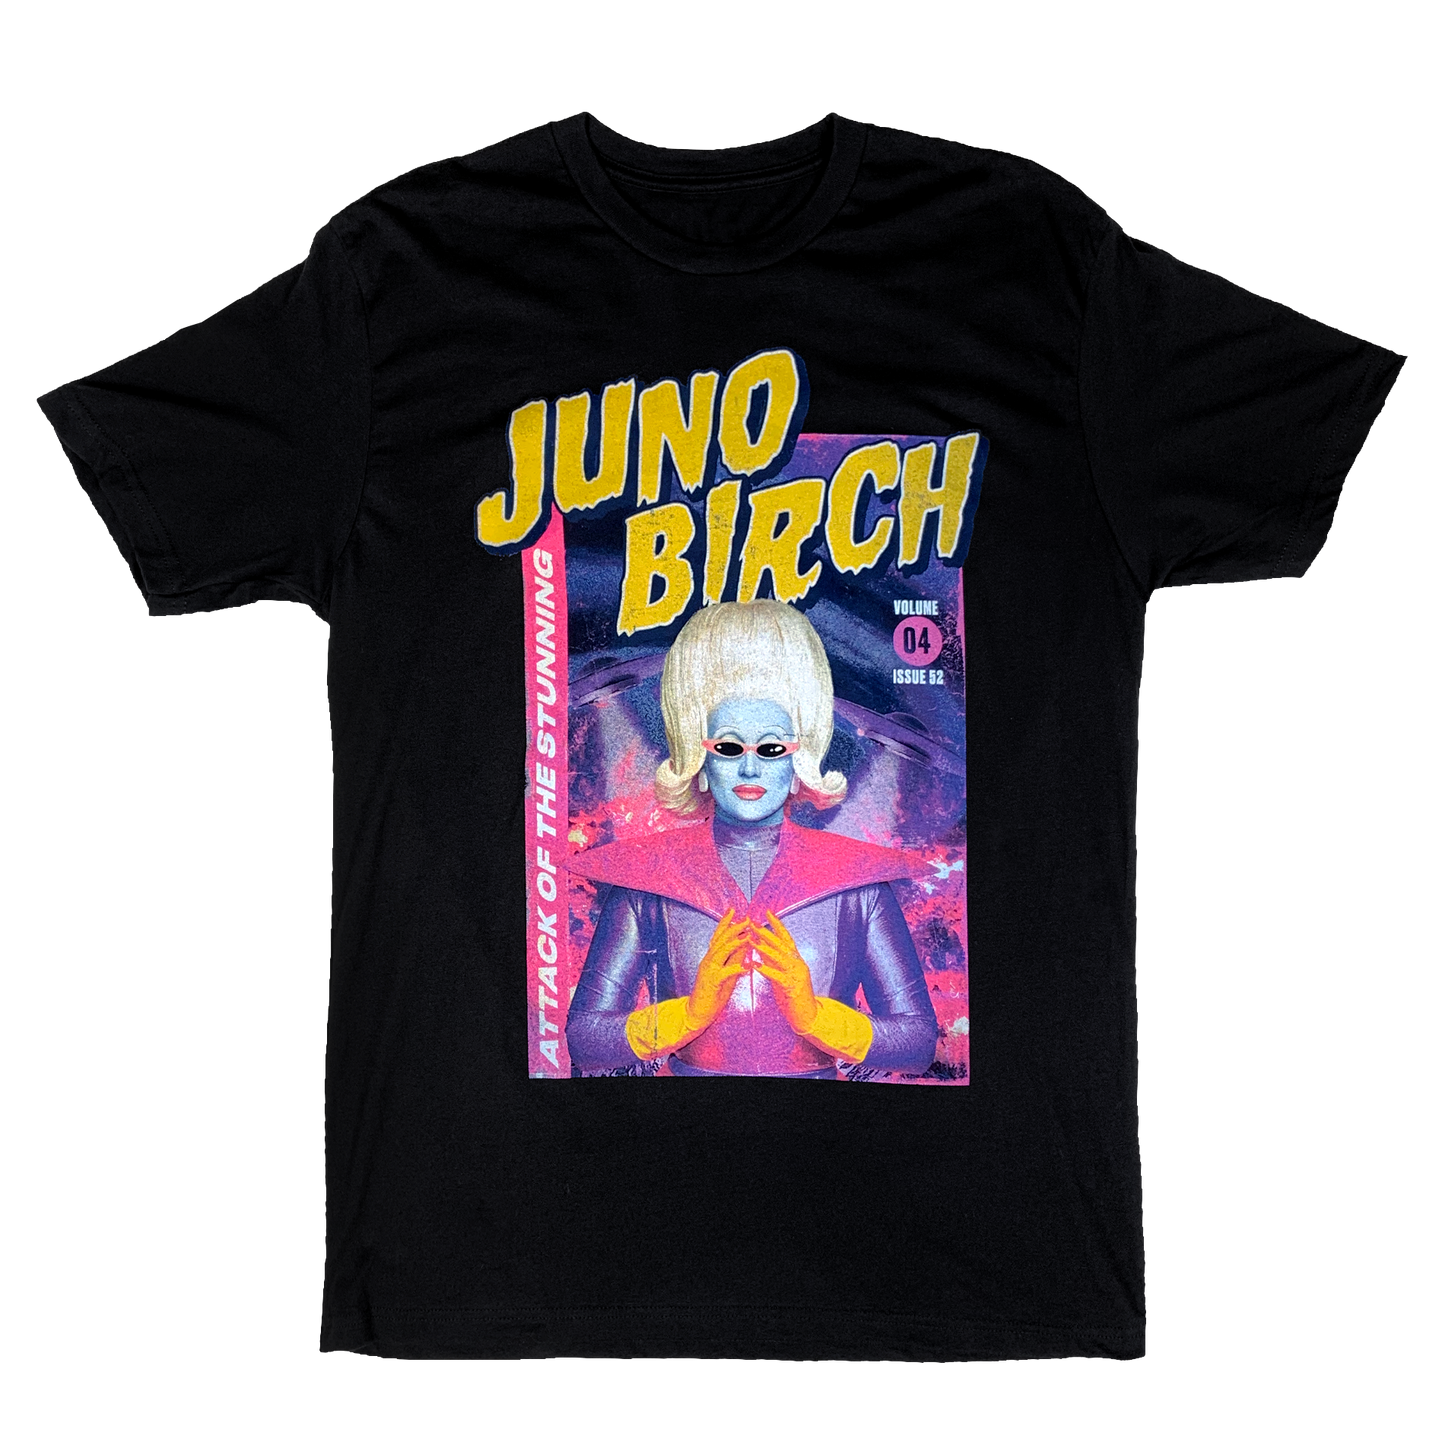 Juno Birch Photo T-shirt